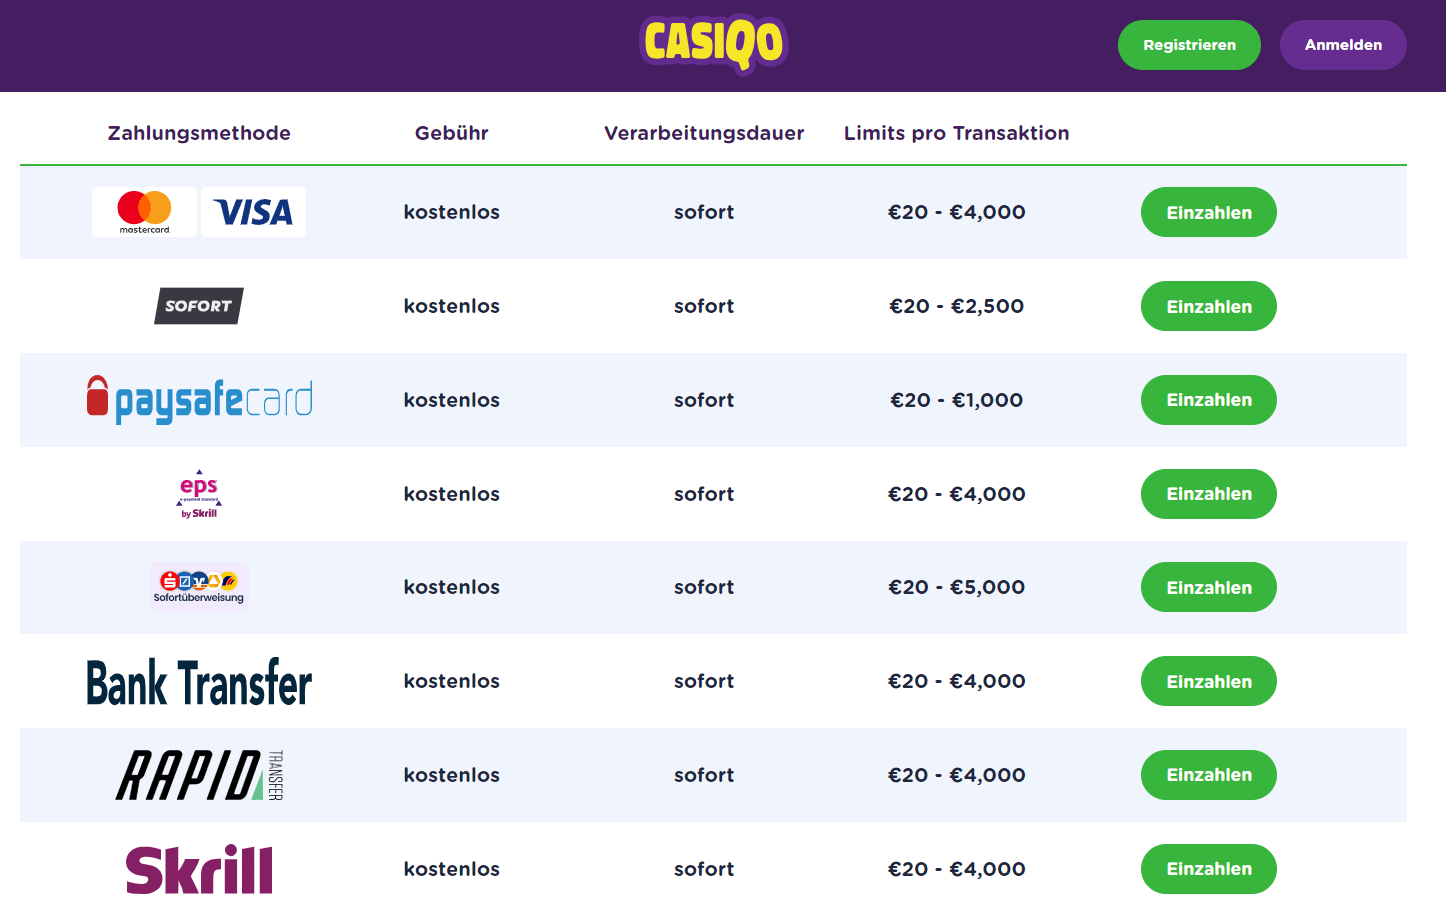 Casiqo Casino Zahlungsmethoden